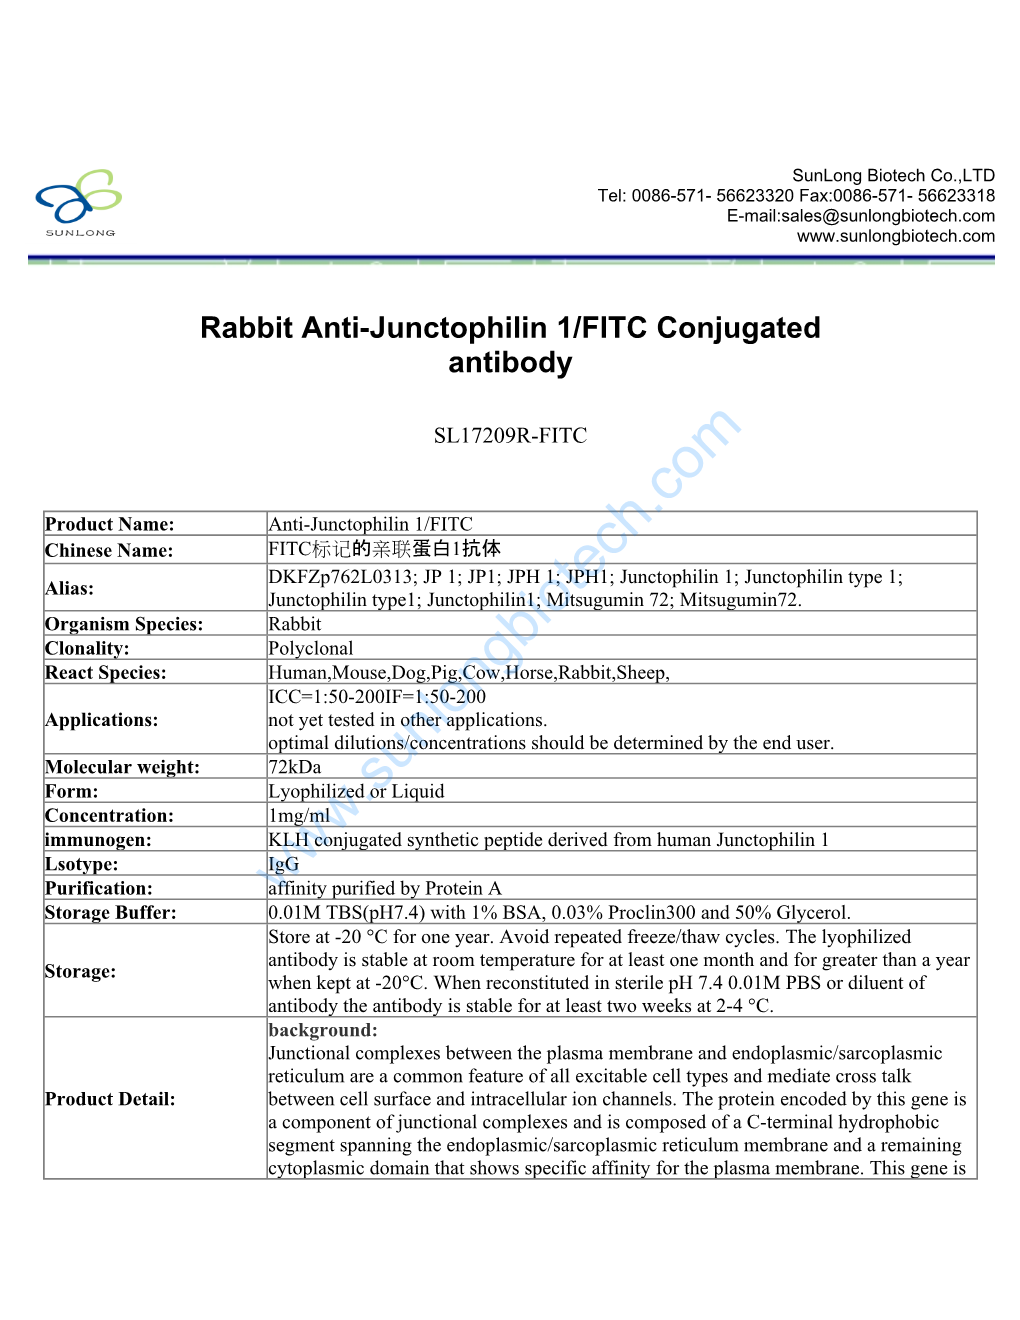 Rabbit Anti-Junctophilin 1/FITC Conjugated Antibody